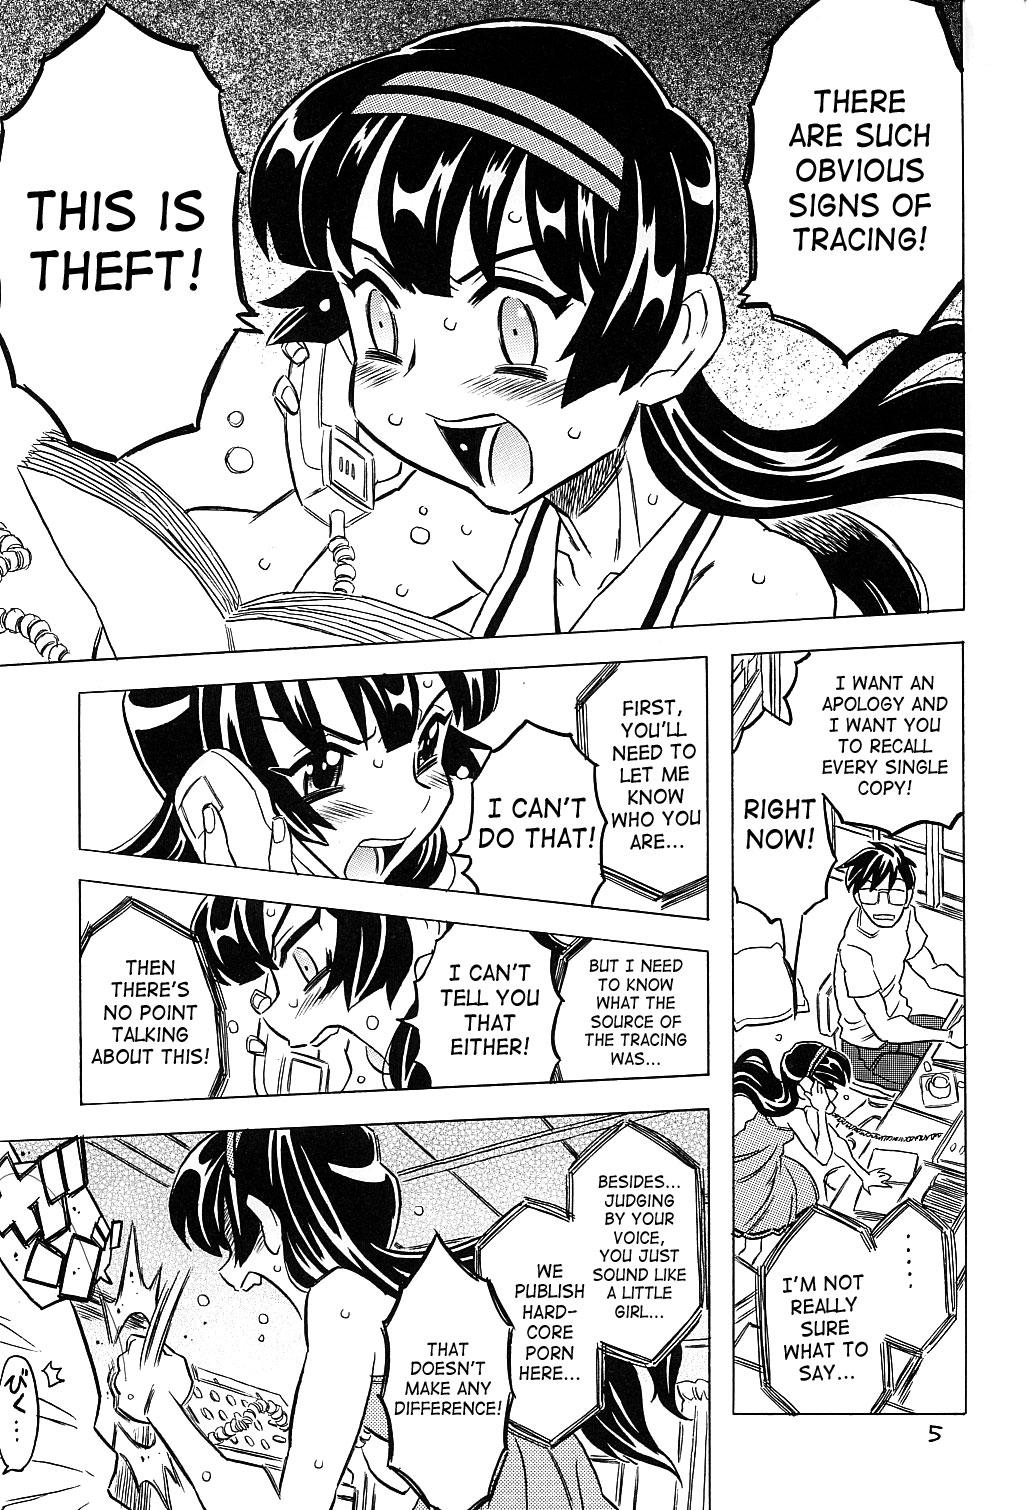 Female Ero Manga Artist Scorned 3